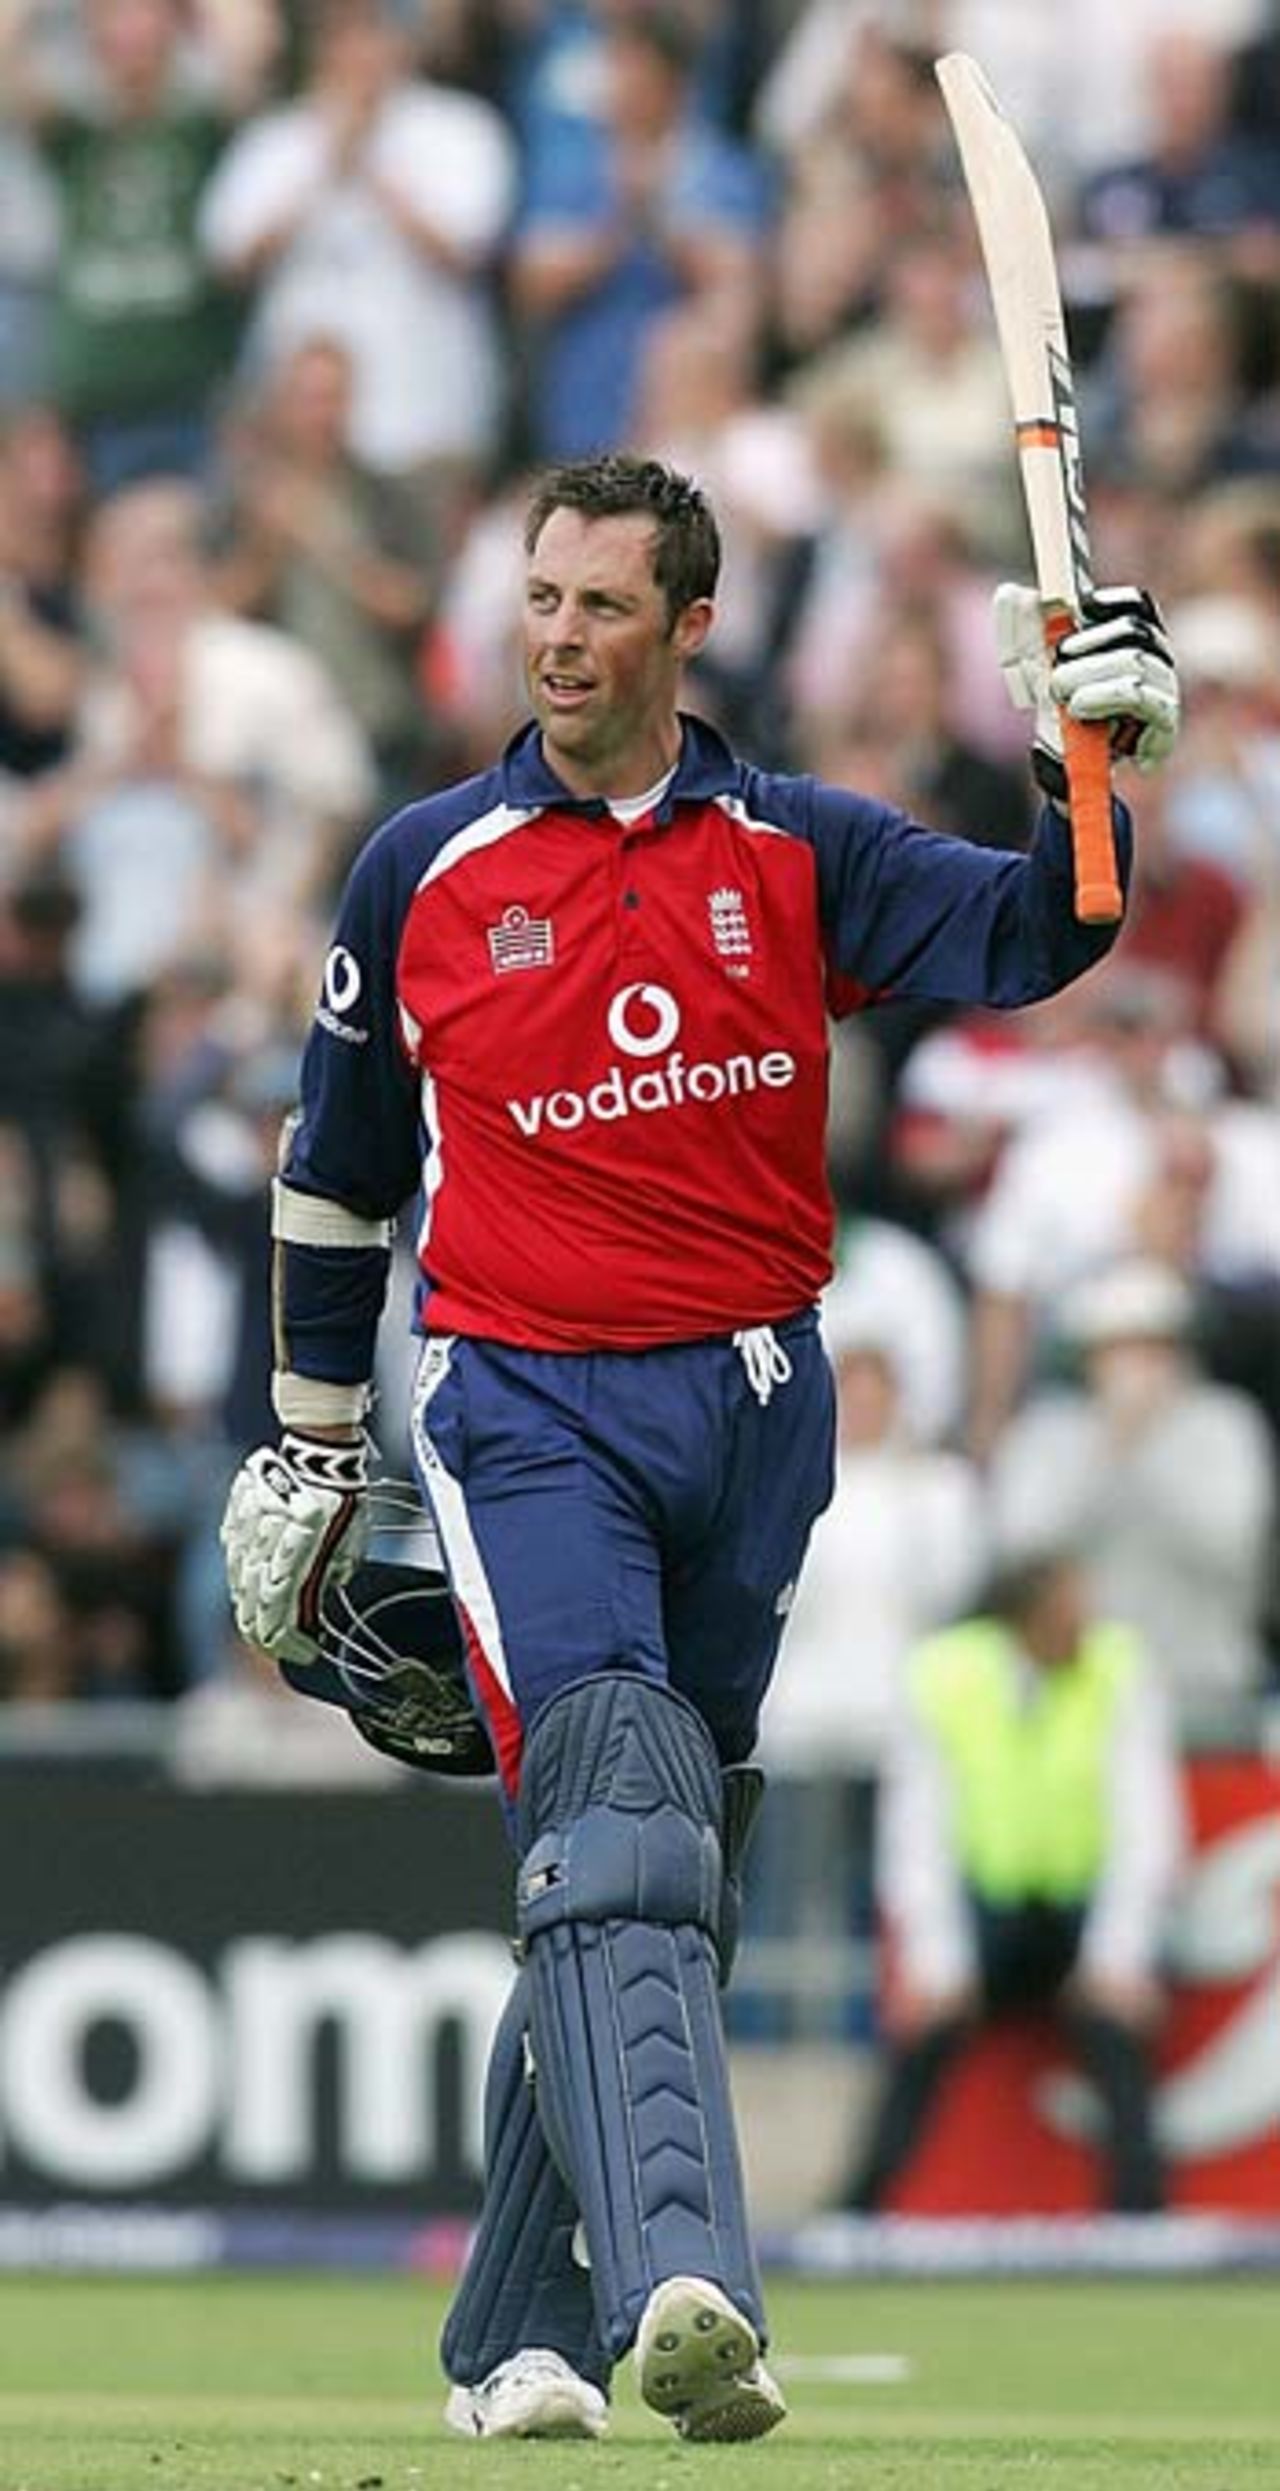 Marcus Trescothick reaches first hundred against Australia, England v Australia, Headingley,  July 7, 2005